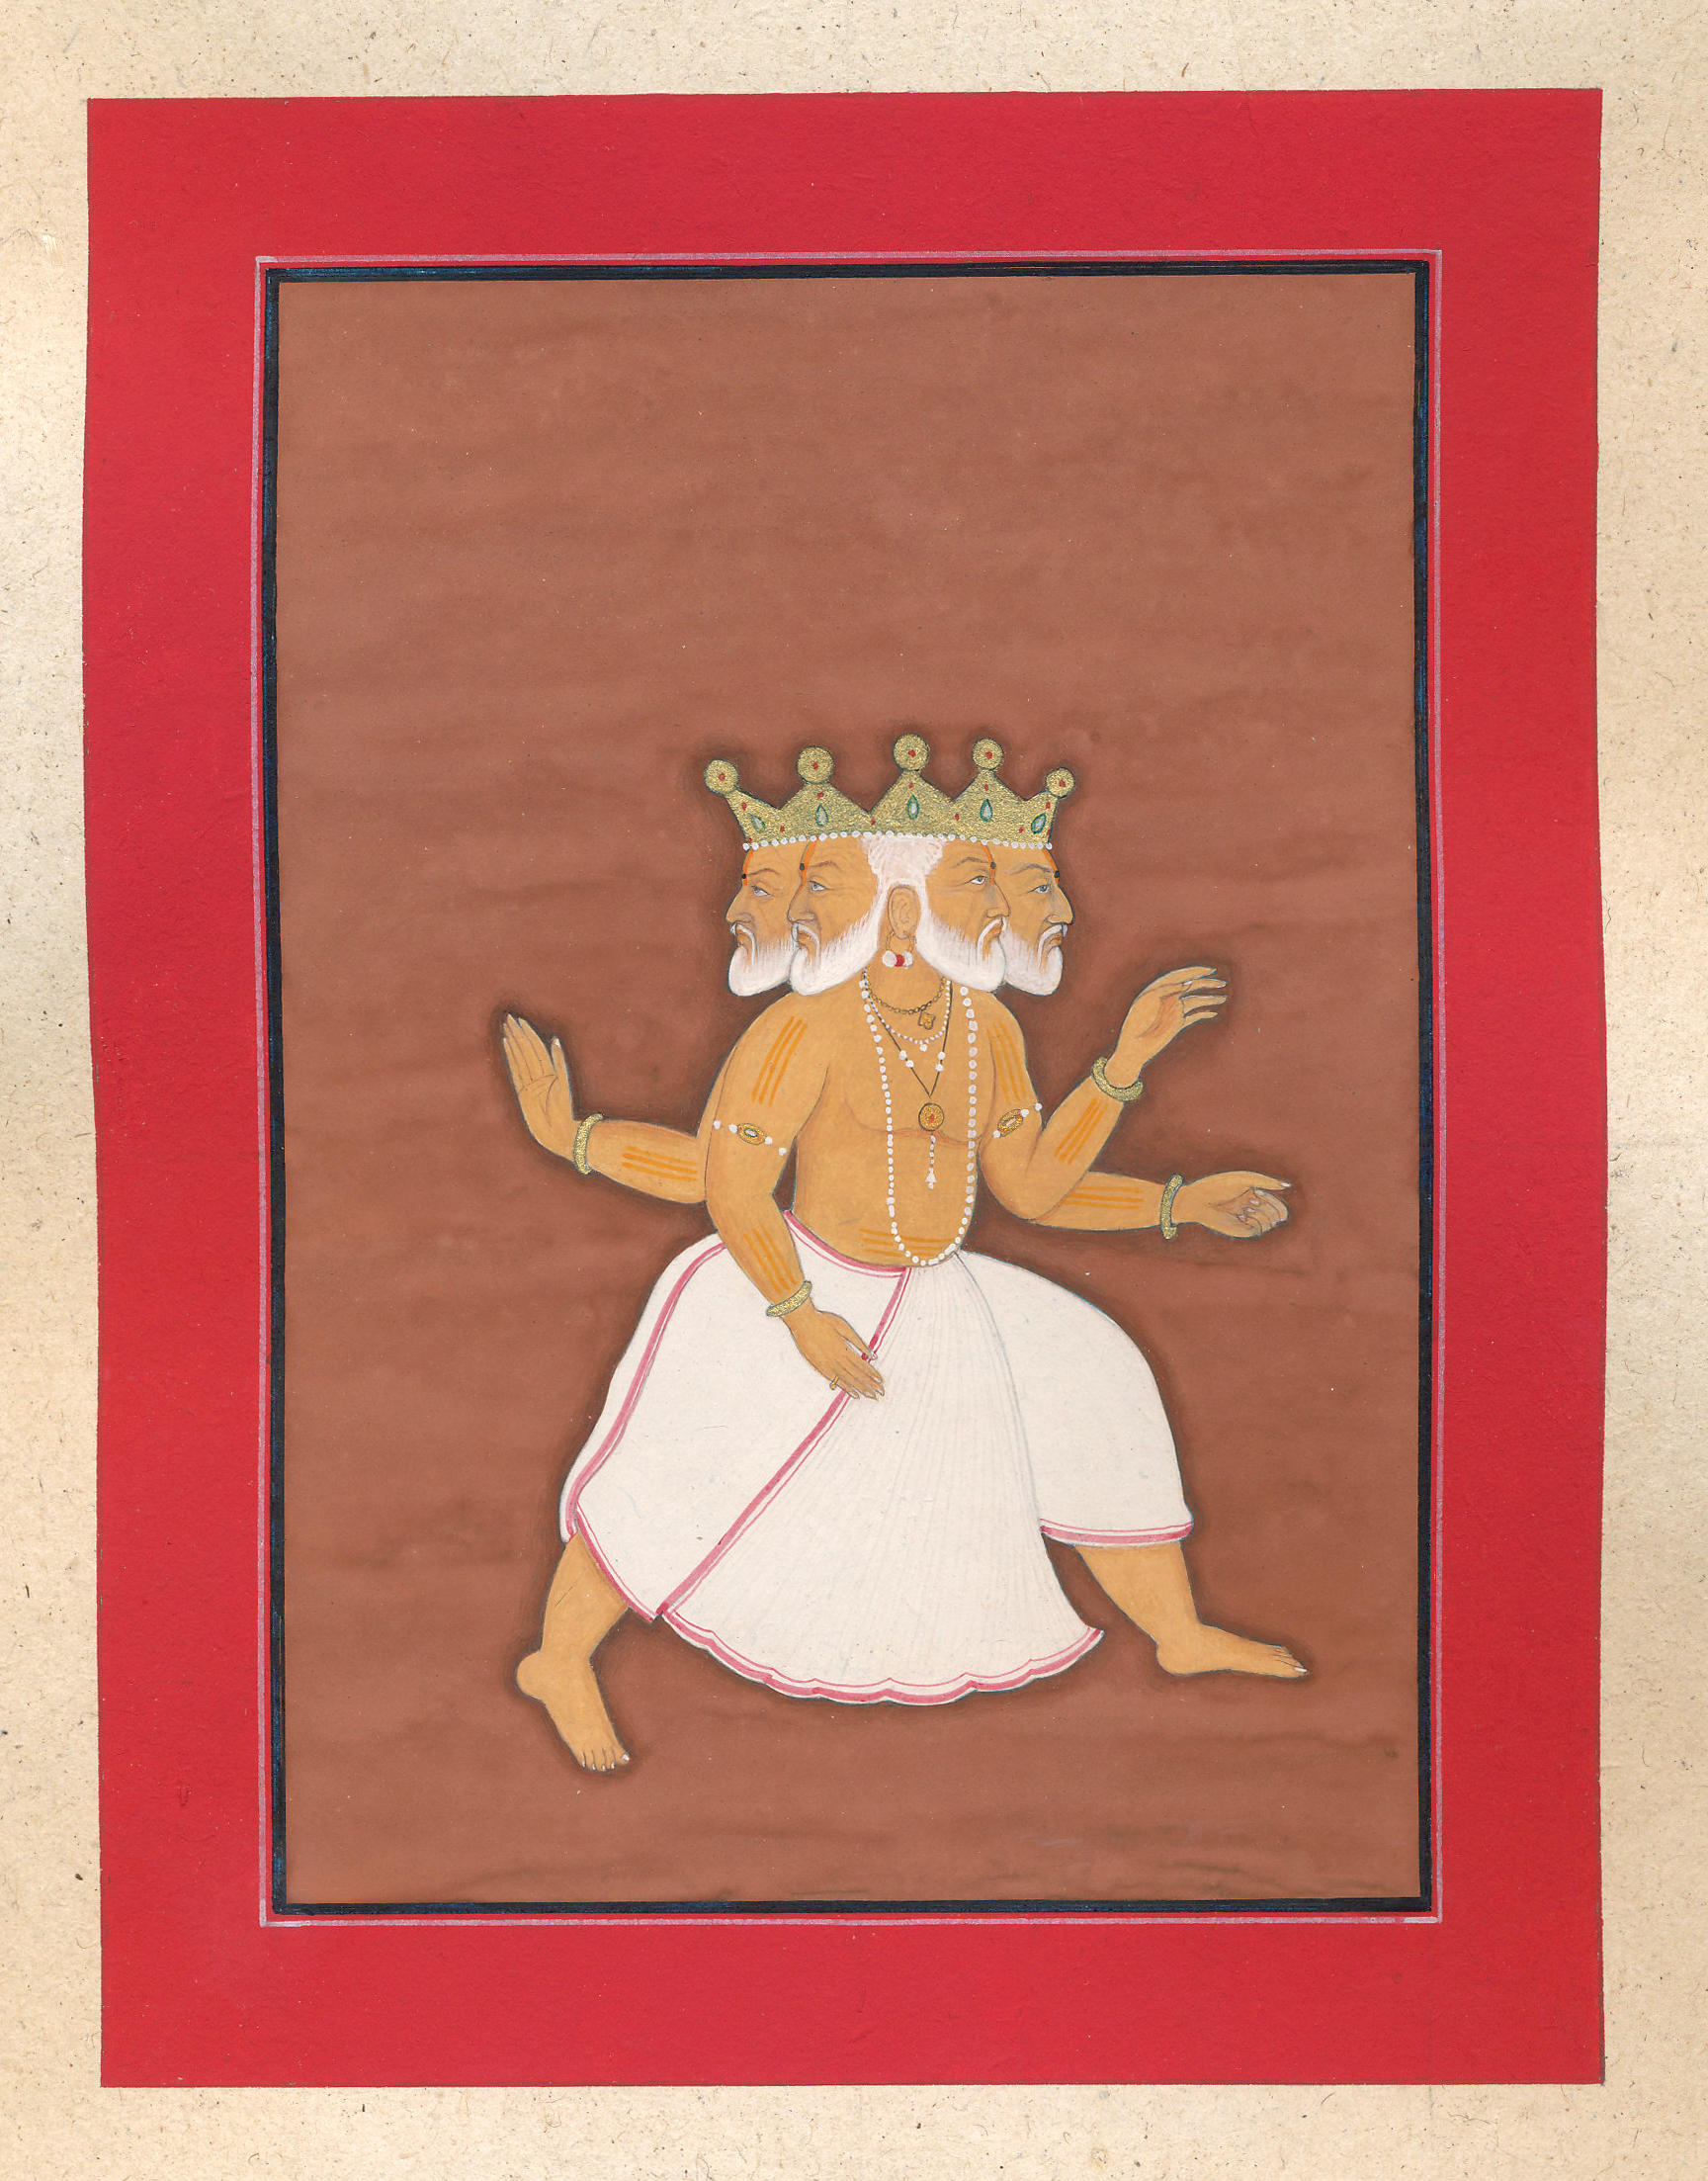 Mumtaz’s depiction of the Hindu god Brahma, the four-headed god of creation